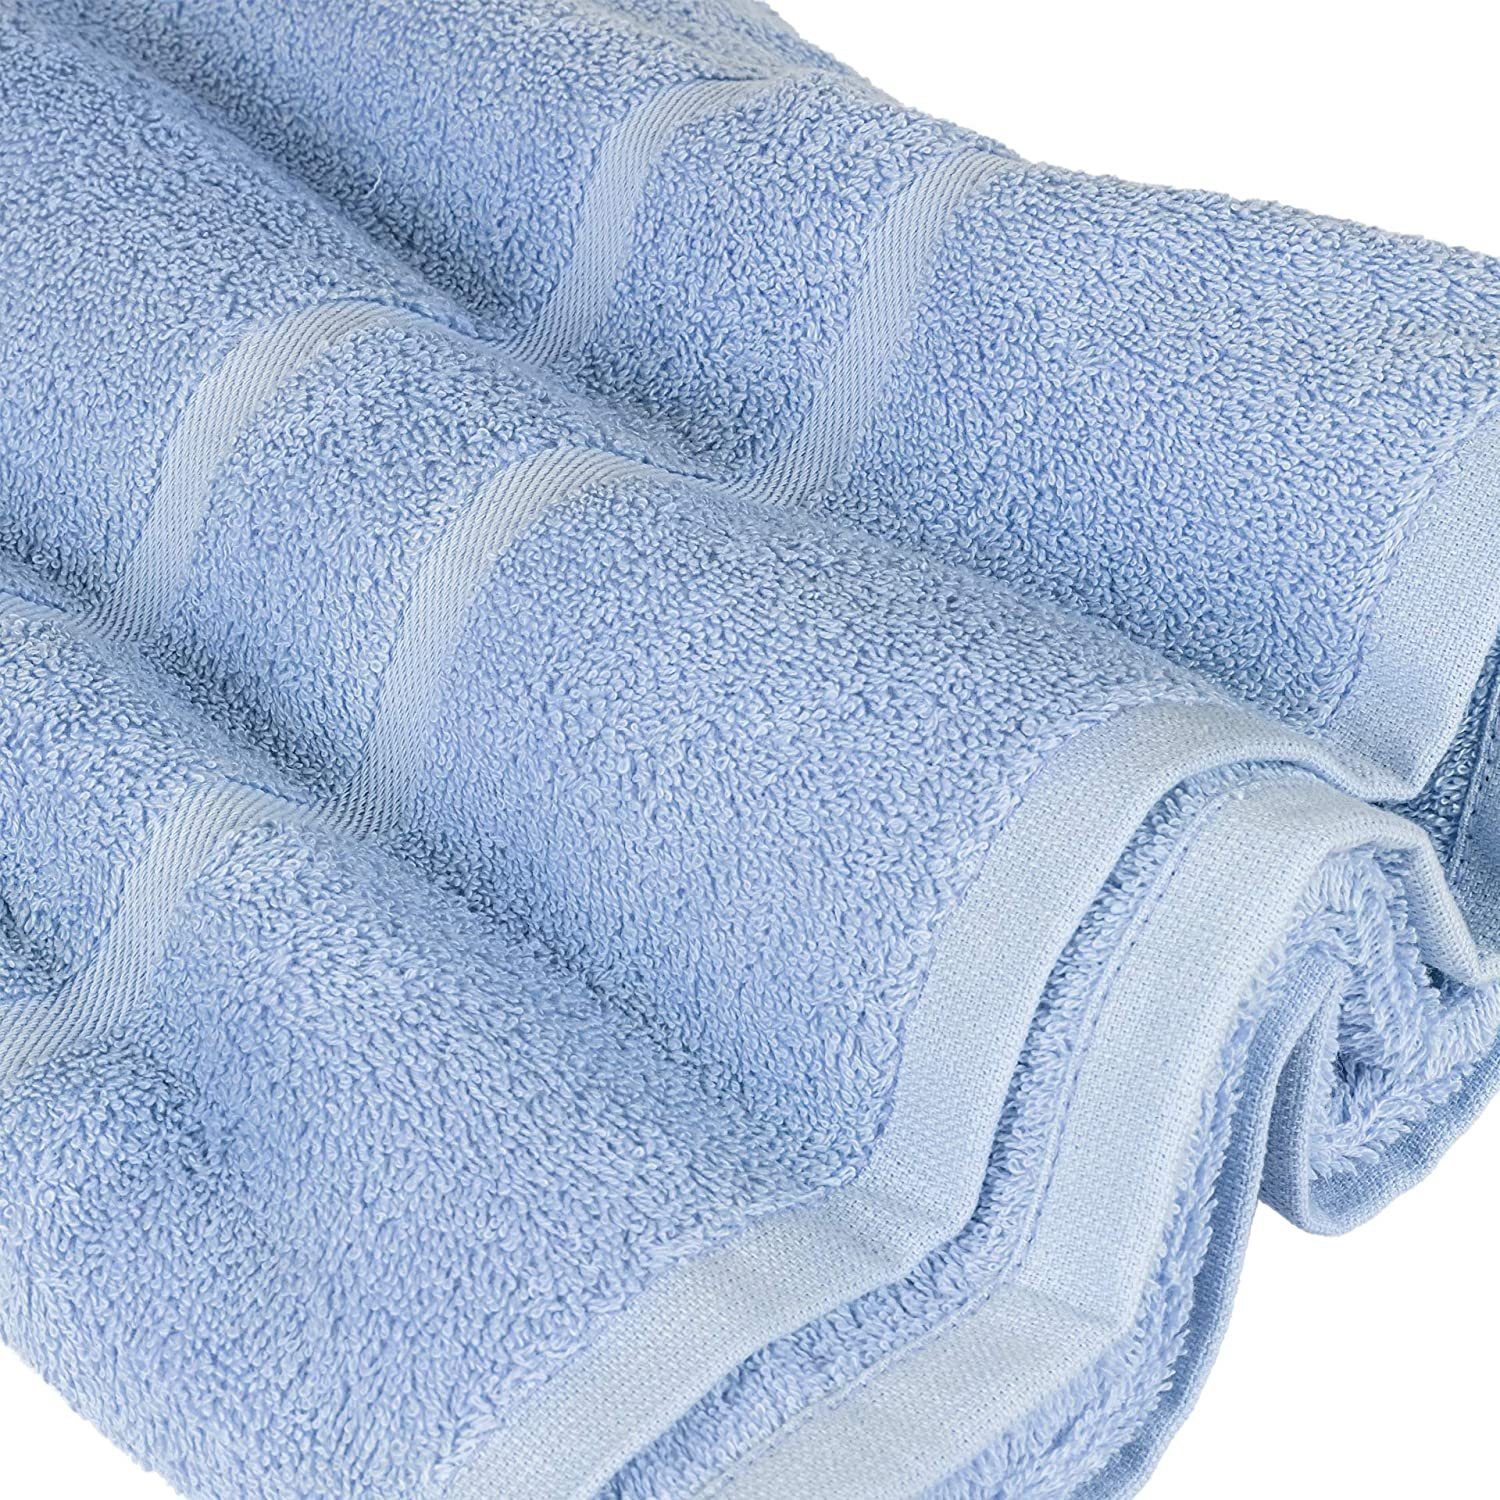 StickandShine Handtuch Set 4x Gästehandtuch Baumwolle Hellblau GSM GSM als Frottee 2x Baumwolle Handtücher Badetücher 500 100% (12 Handtuch 2x Duschtücher (Spar-set), verschiedenen Farben Pack, 2x 500 12er 100% Teilig) in SET